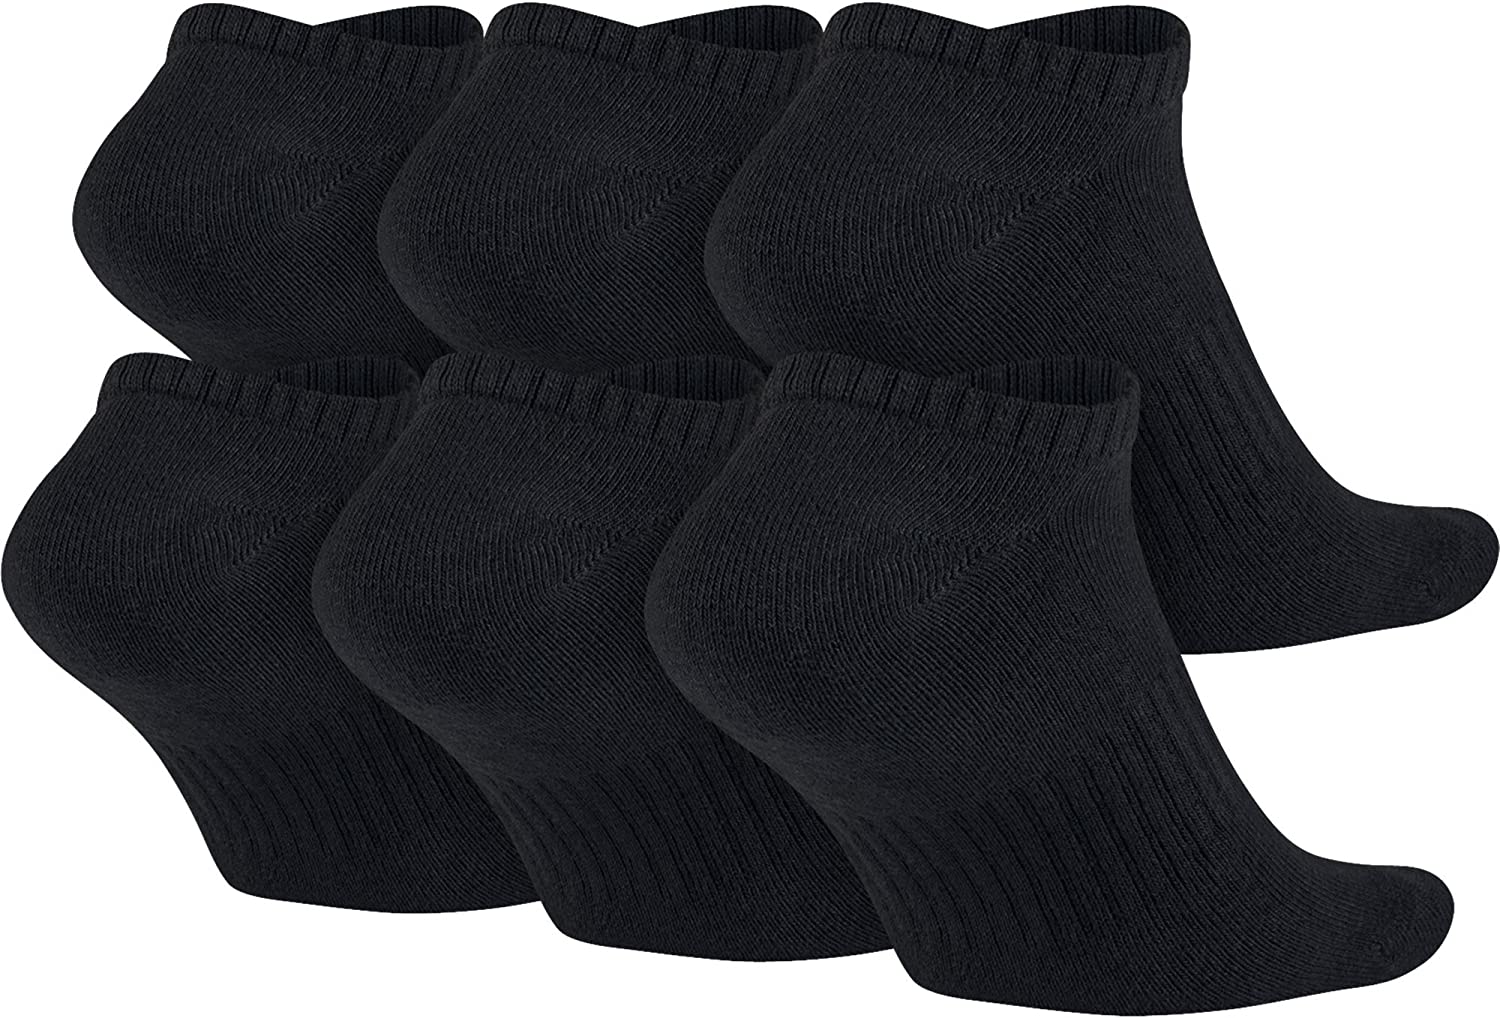 Nike Unisex Men's Women's Cotton Cushion No Show Socks 6-Pack - Black